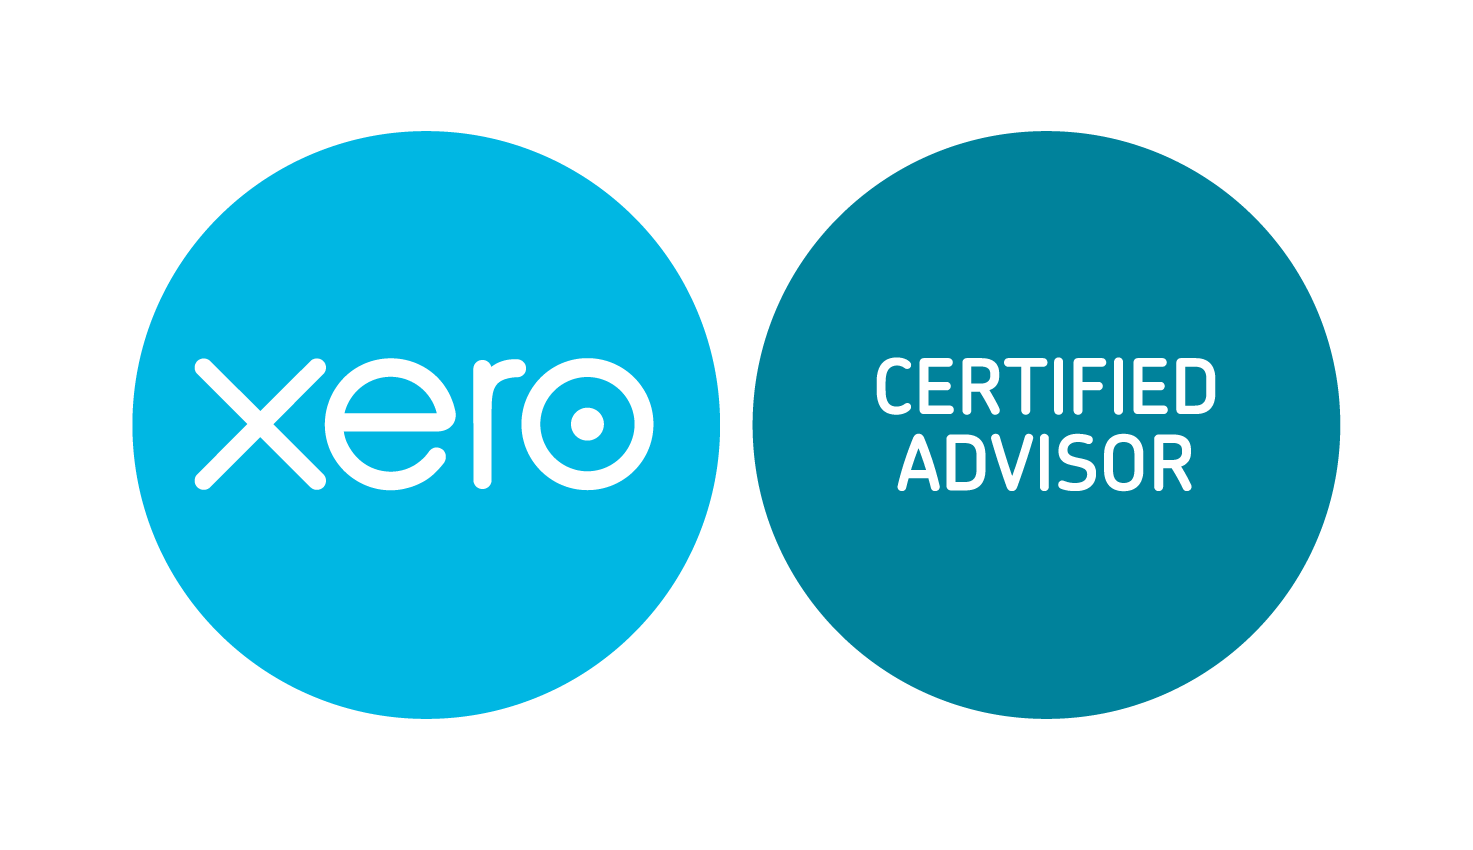 image-2443958-xero-certified-advisor-logo-hires-RGB.png